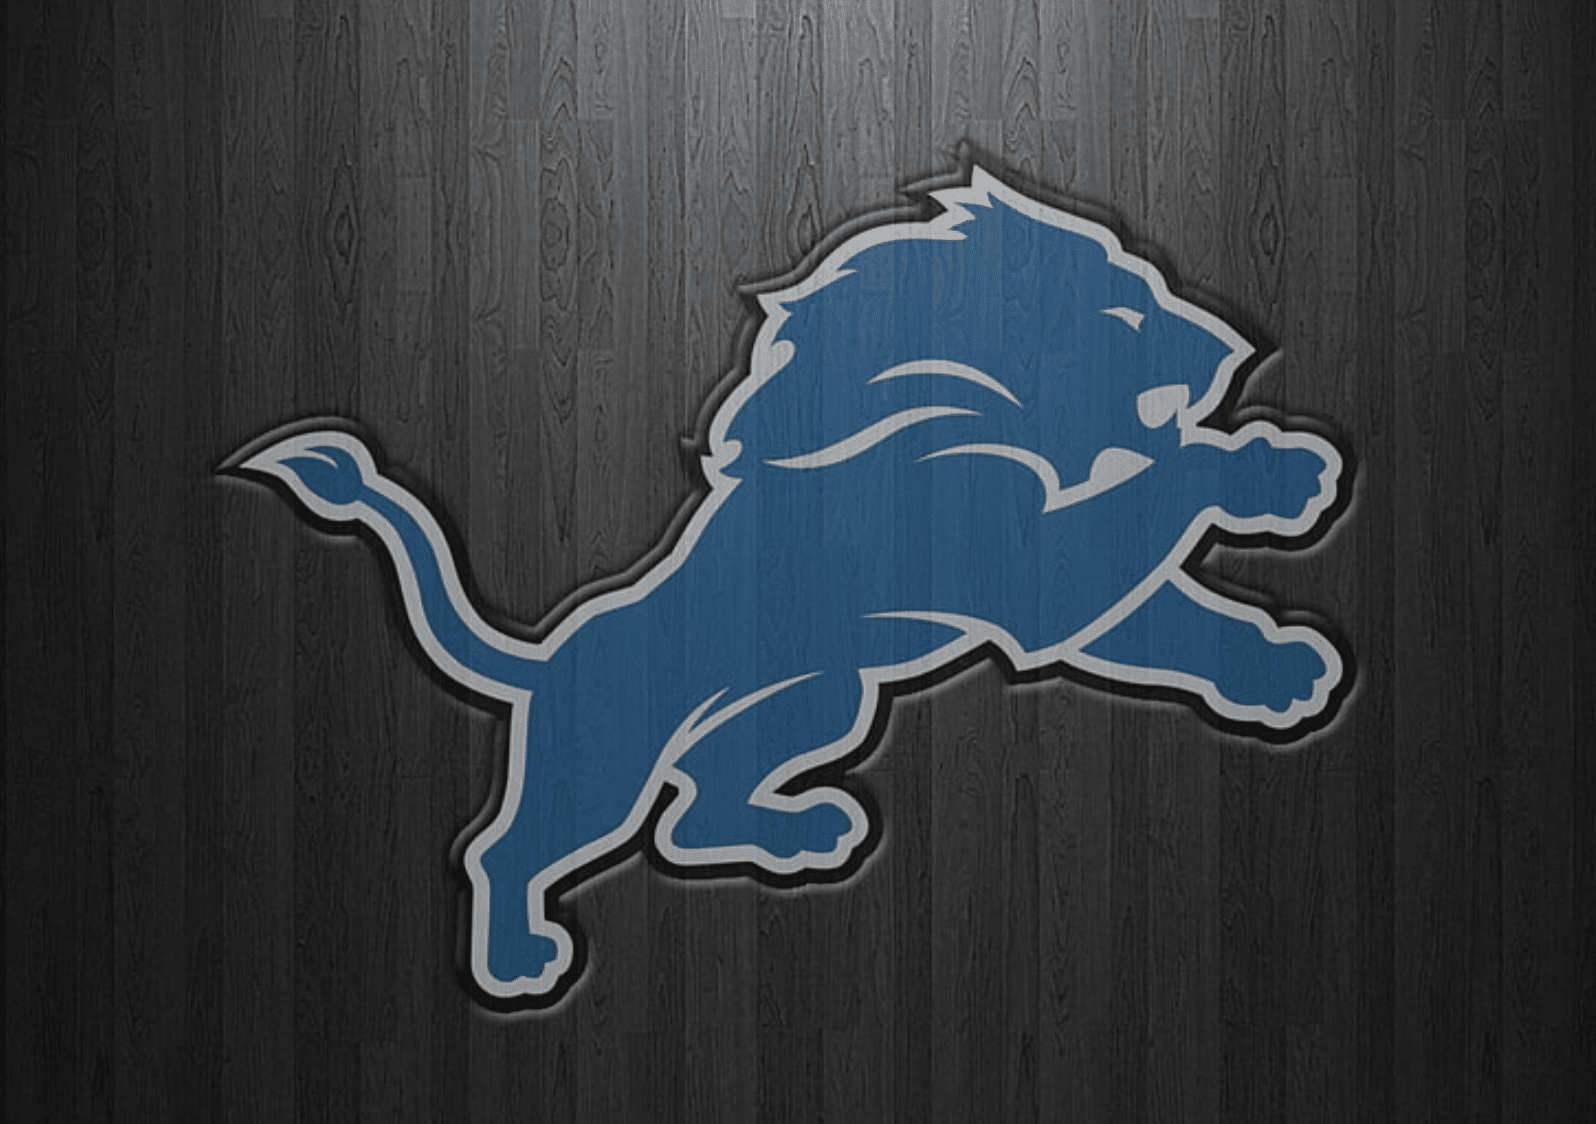 Detroit Lions 2023 NFL Power Rankings 2023 NFL Mock Draft NFL Hall of Fame Gould Off-season needs Teddy Bridgewater Jake McQuaide Ford Family Roschon Johnson